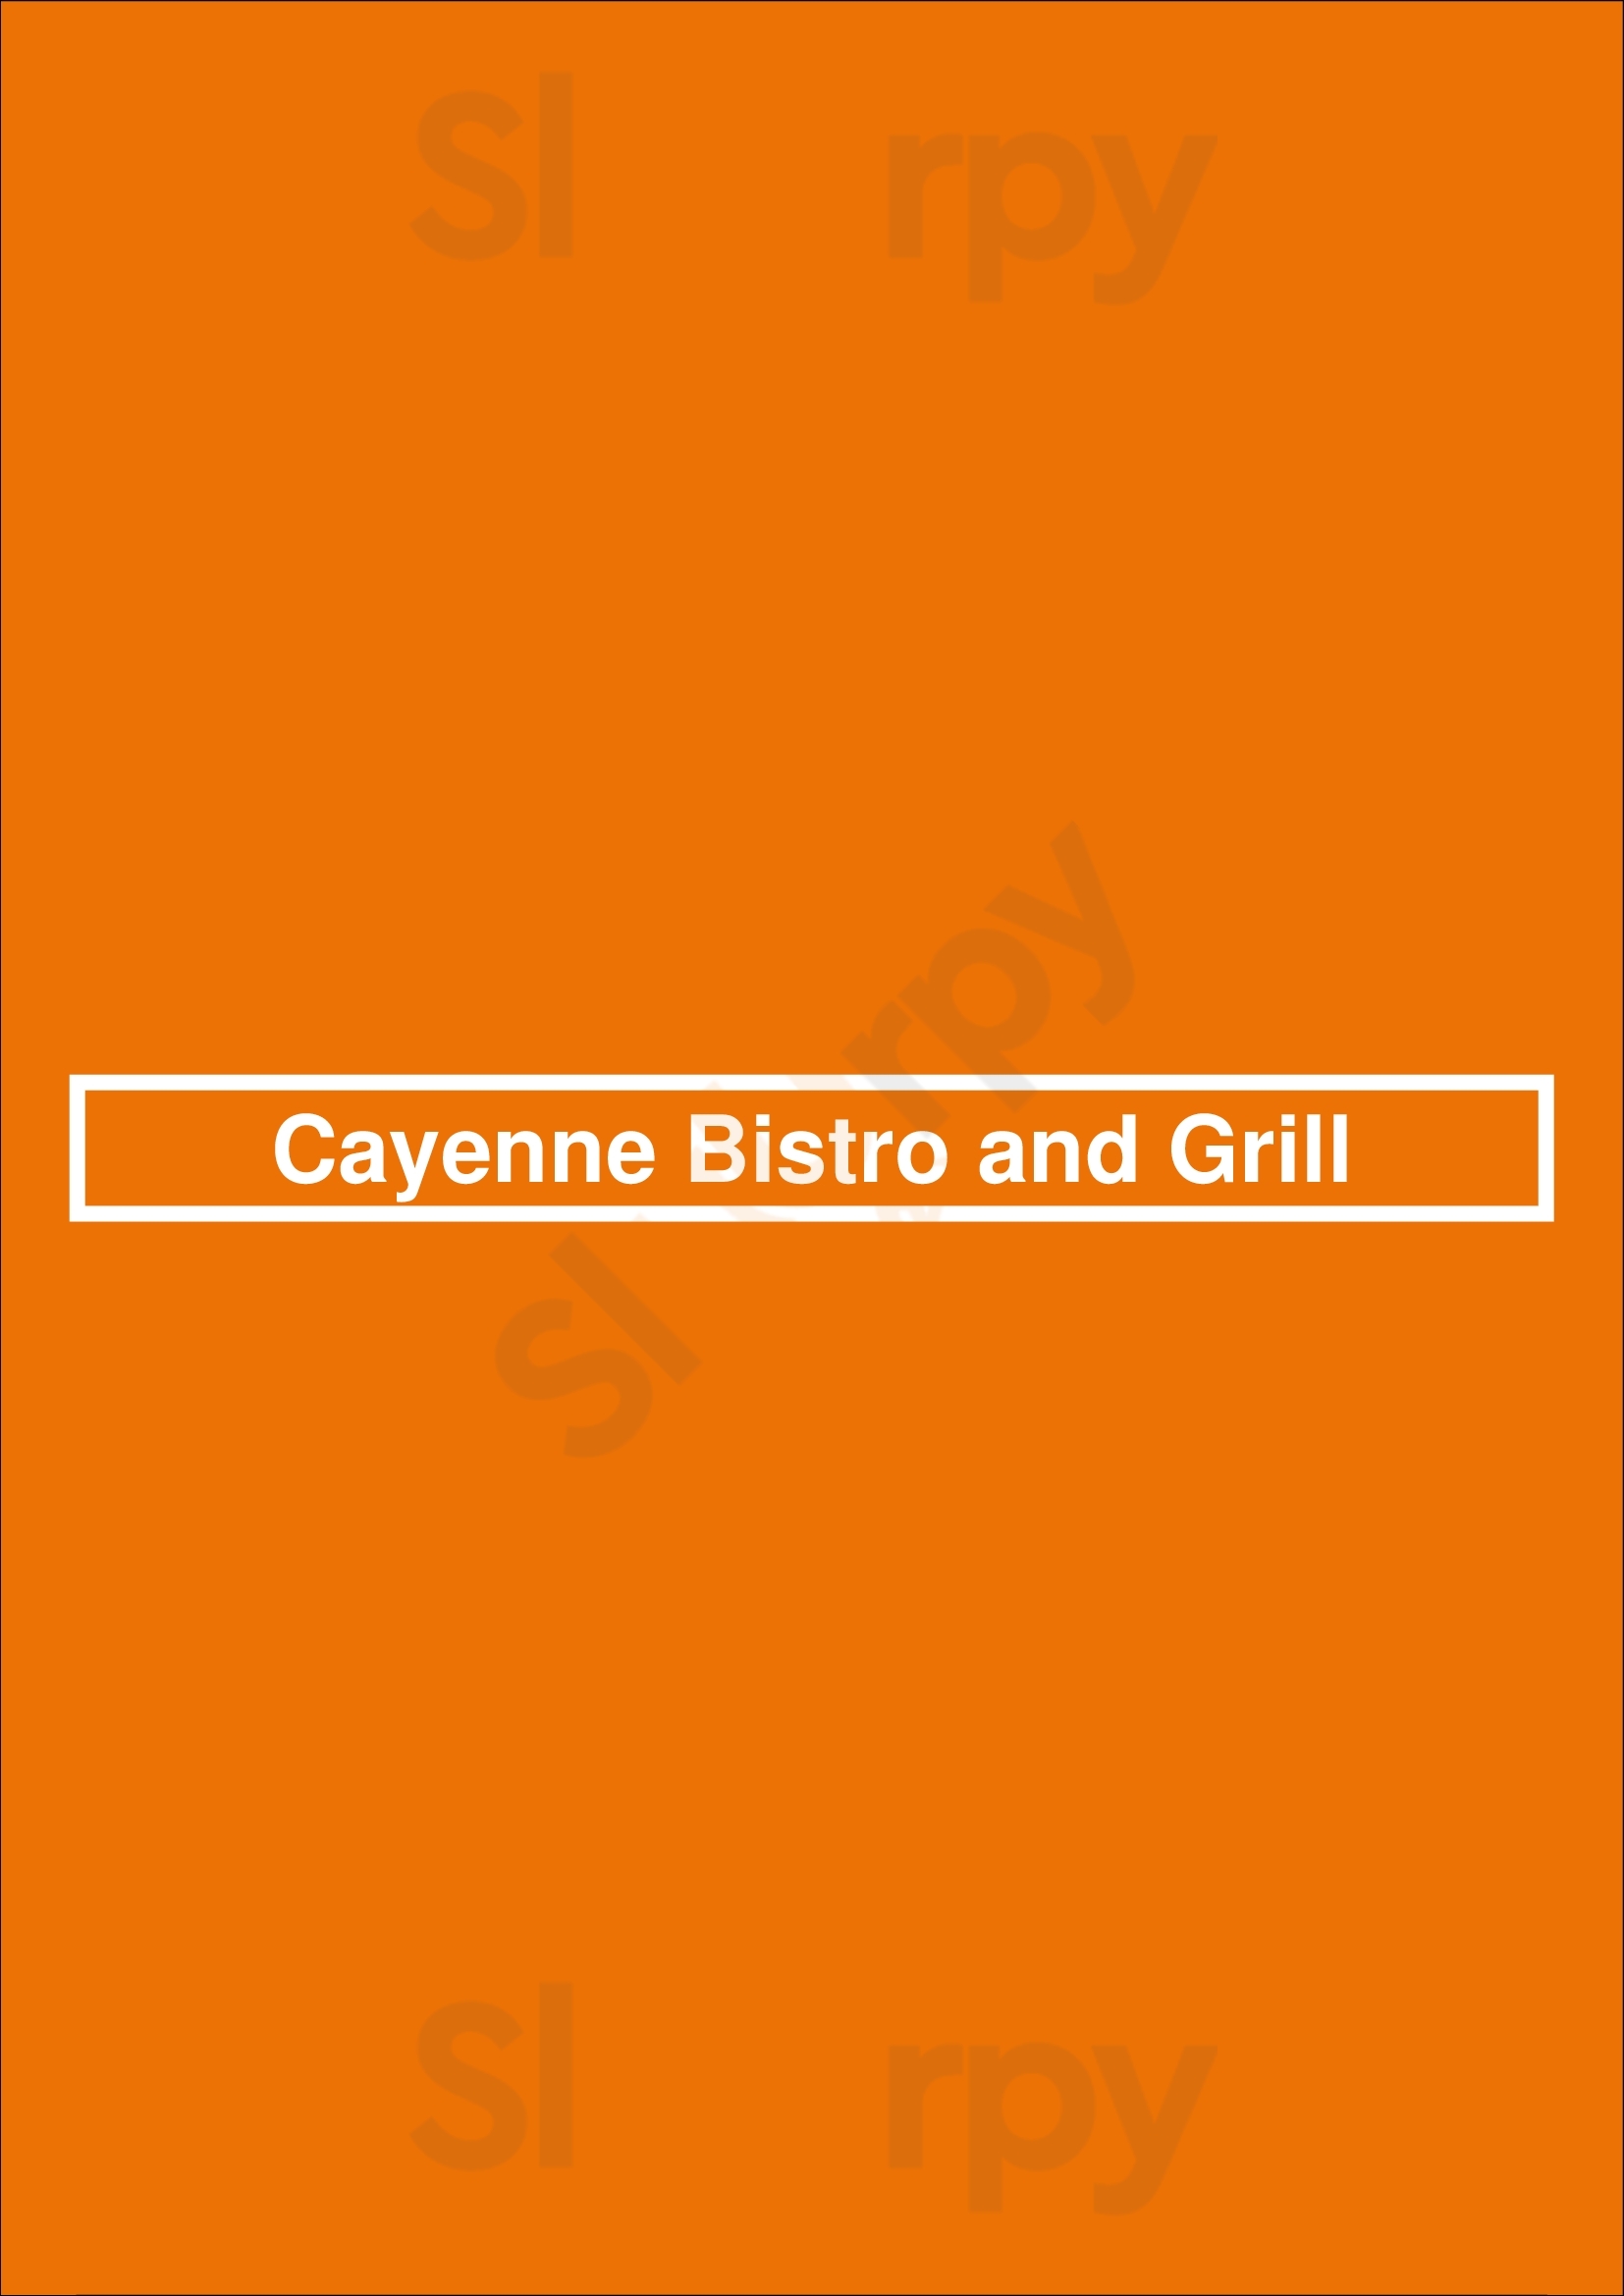 Cayenne Bistro & Grill Burnaby Menu - 1